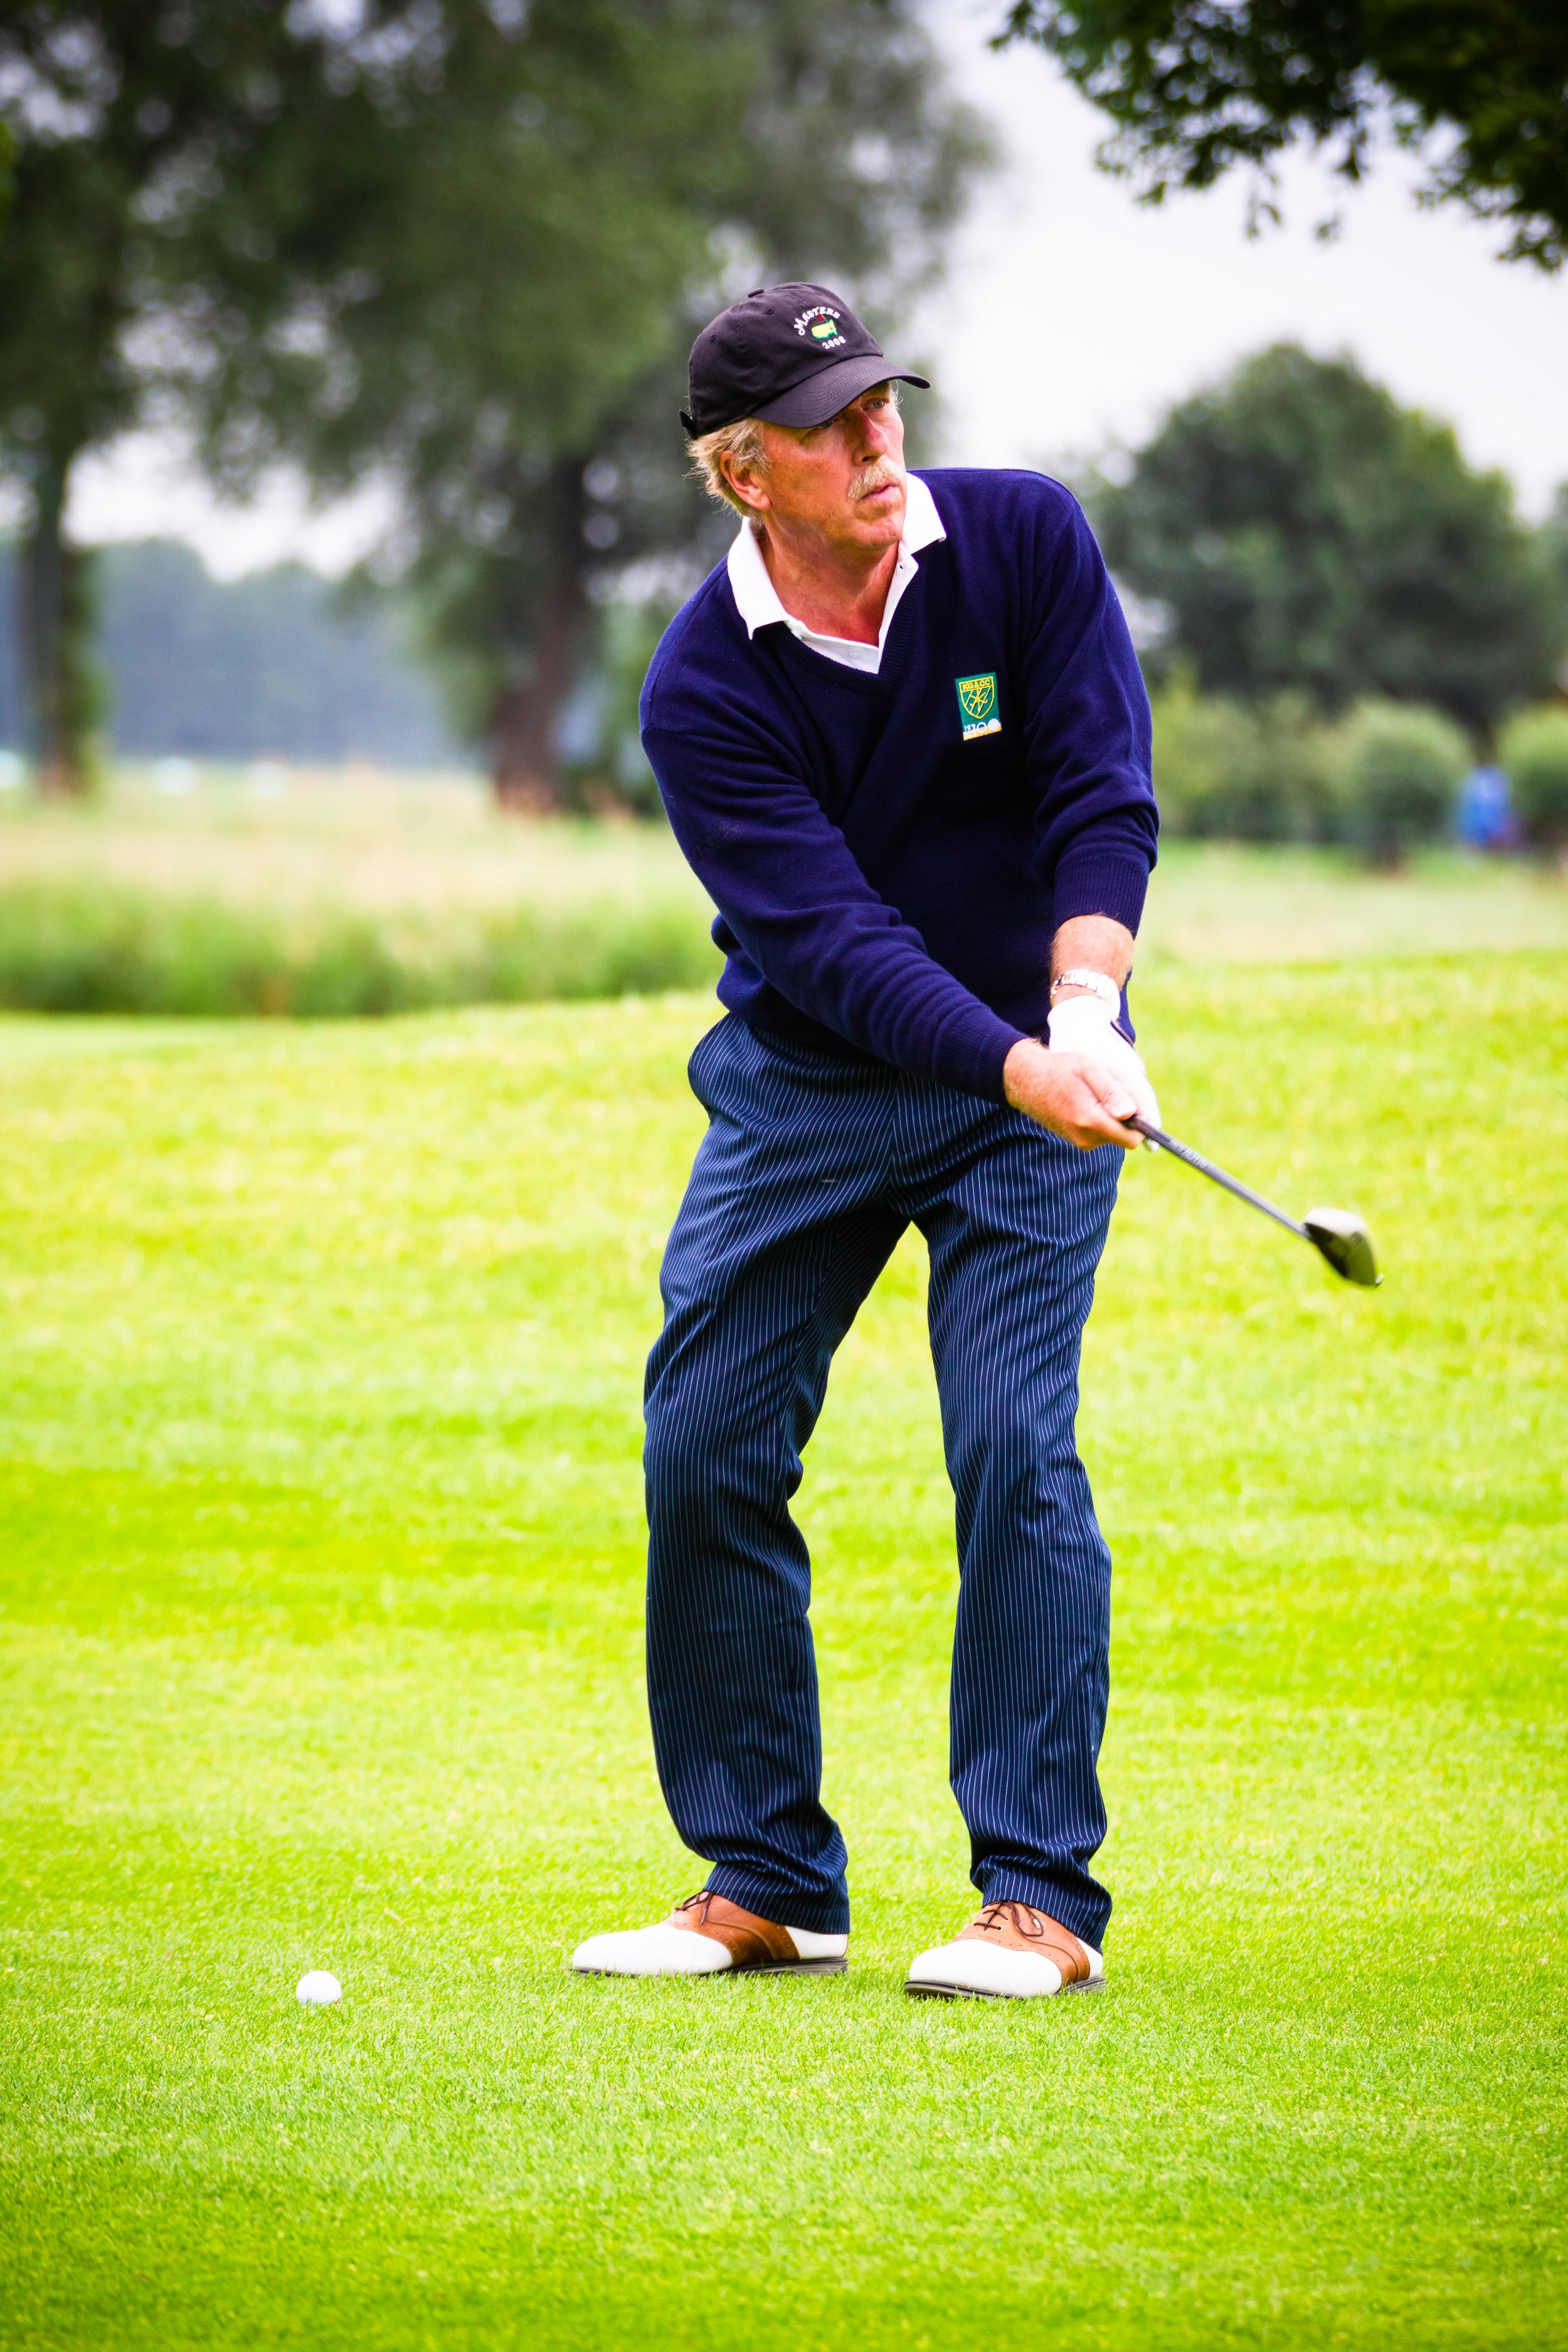 Stefan Segers eventfotografie IHC Merwede Golf toernooi-30.jpg